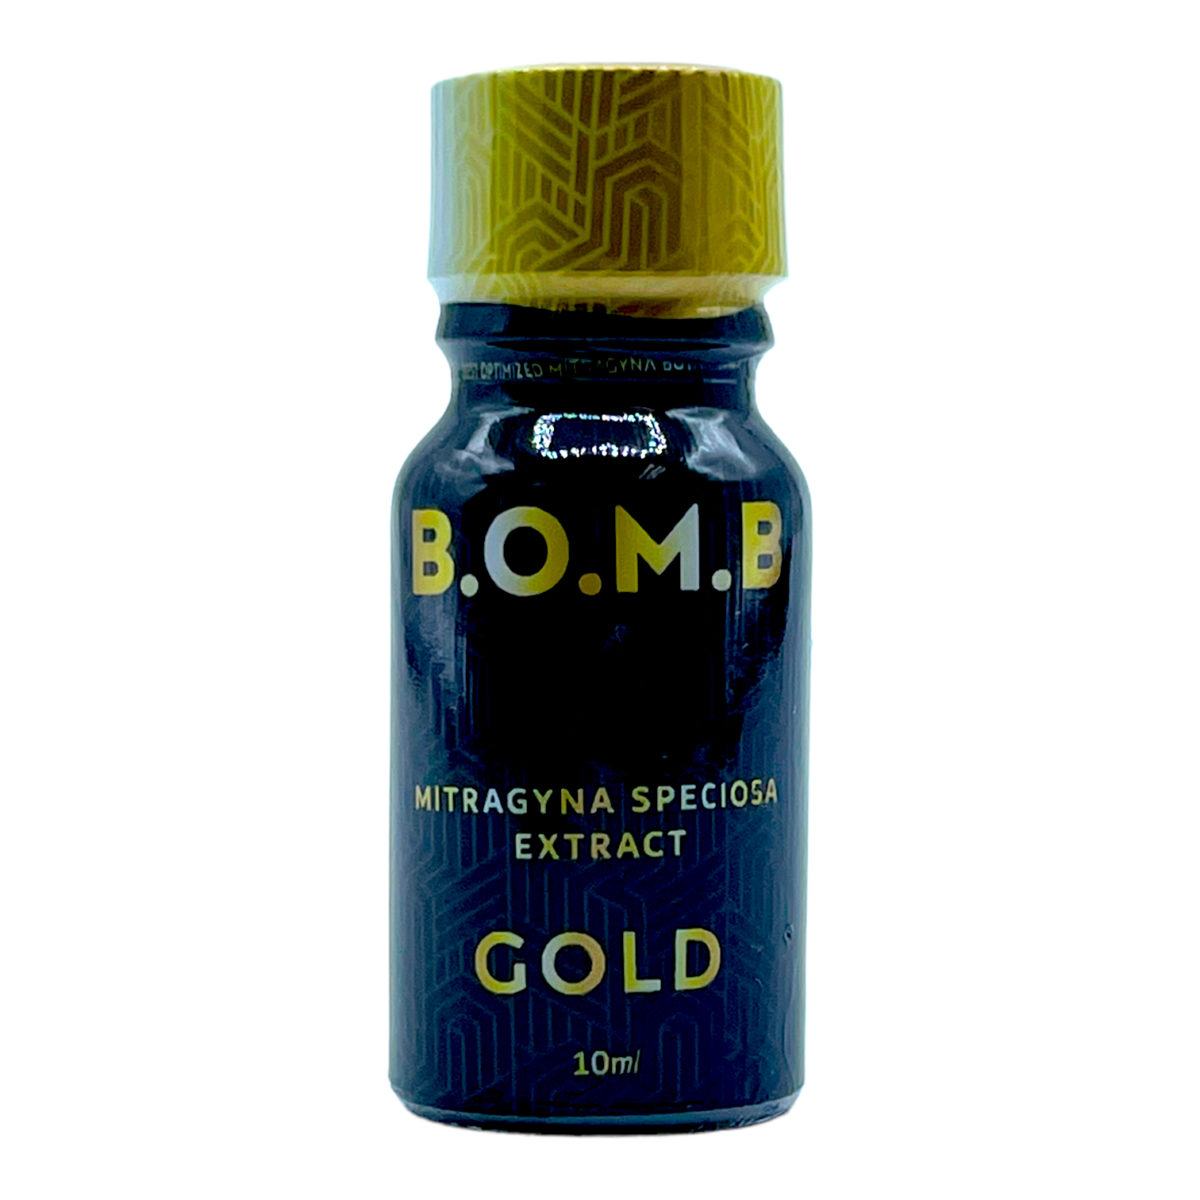 BOMB Gold Kratom Extract Shot, 10ml